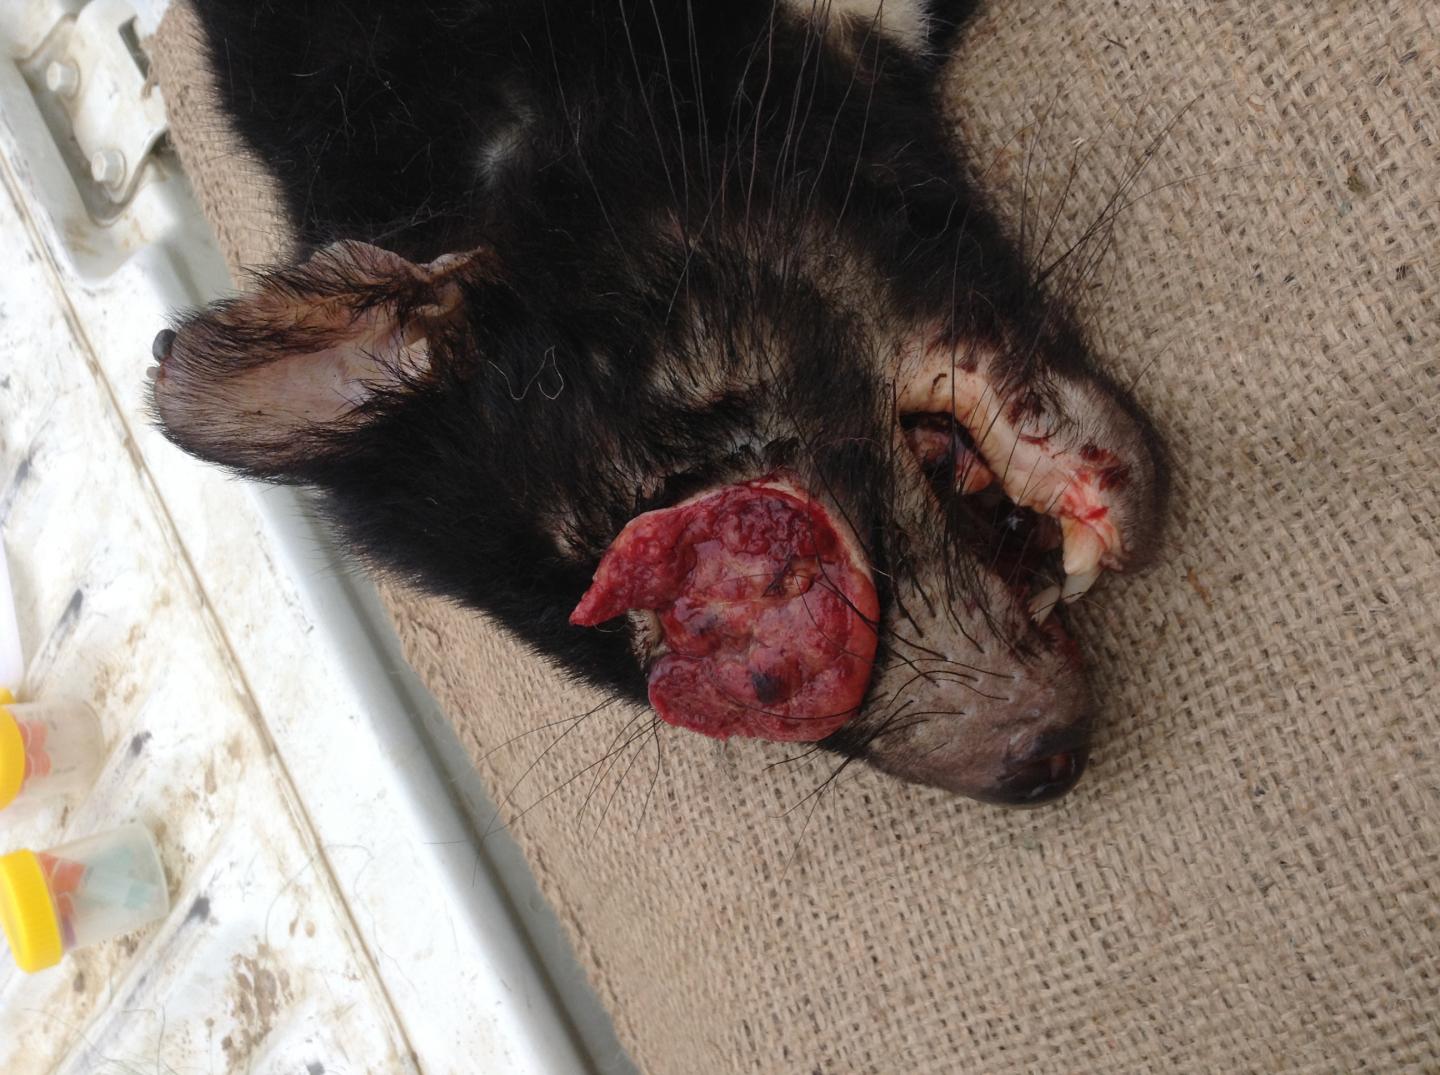 Tasmanian Devil with Facial Tumor